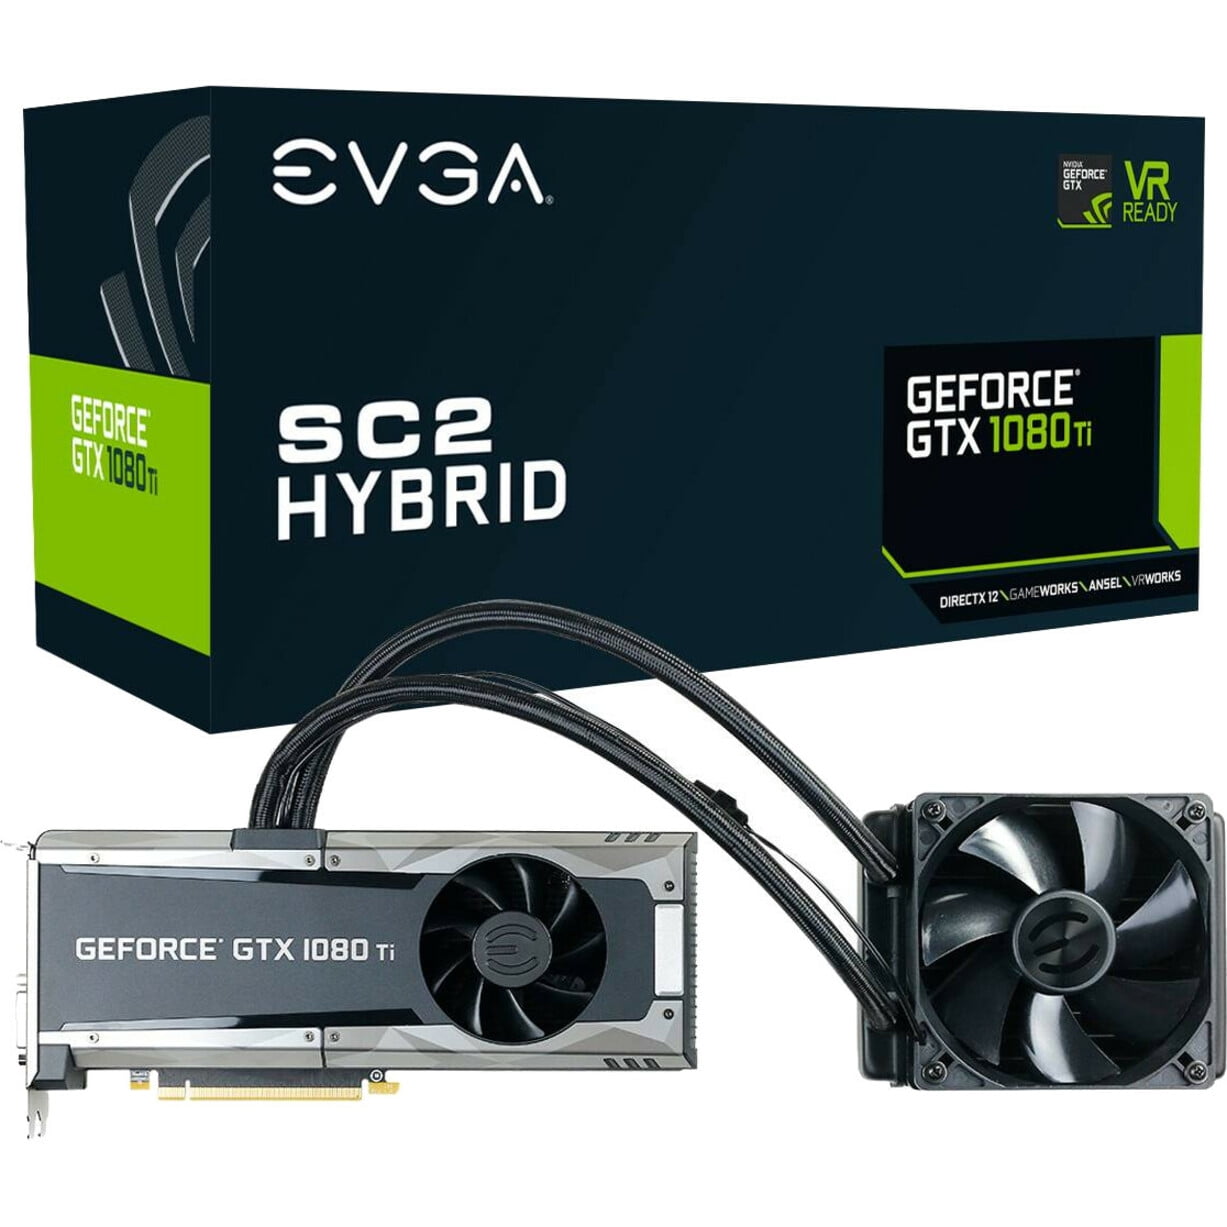 EVGA GeForce GTX 1080 Ti SC2 HYBRID GAMING 11GB GDDR5X Graphics 